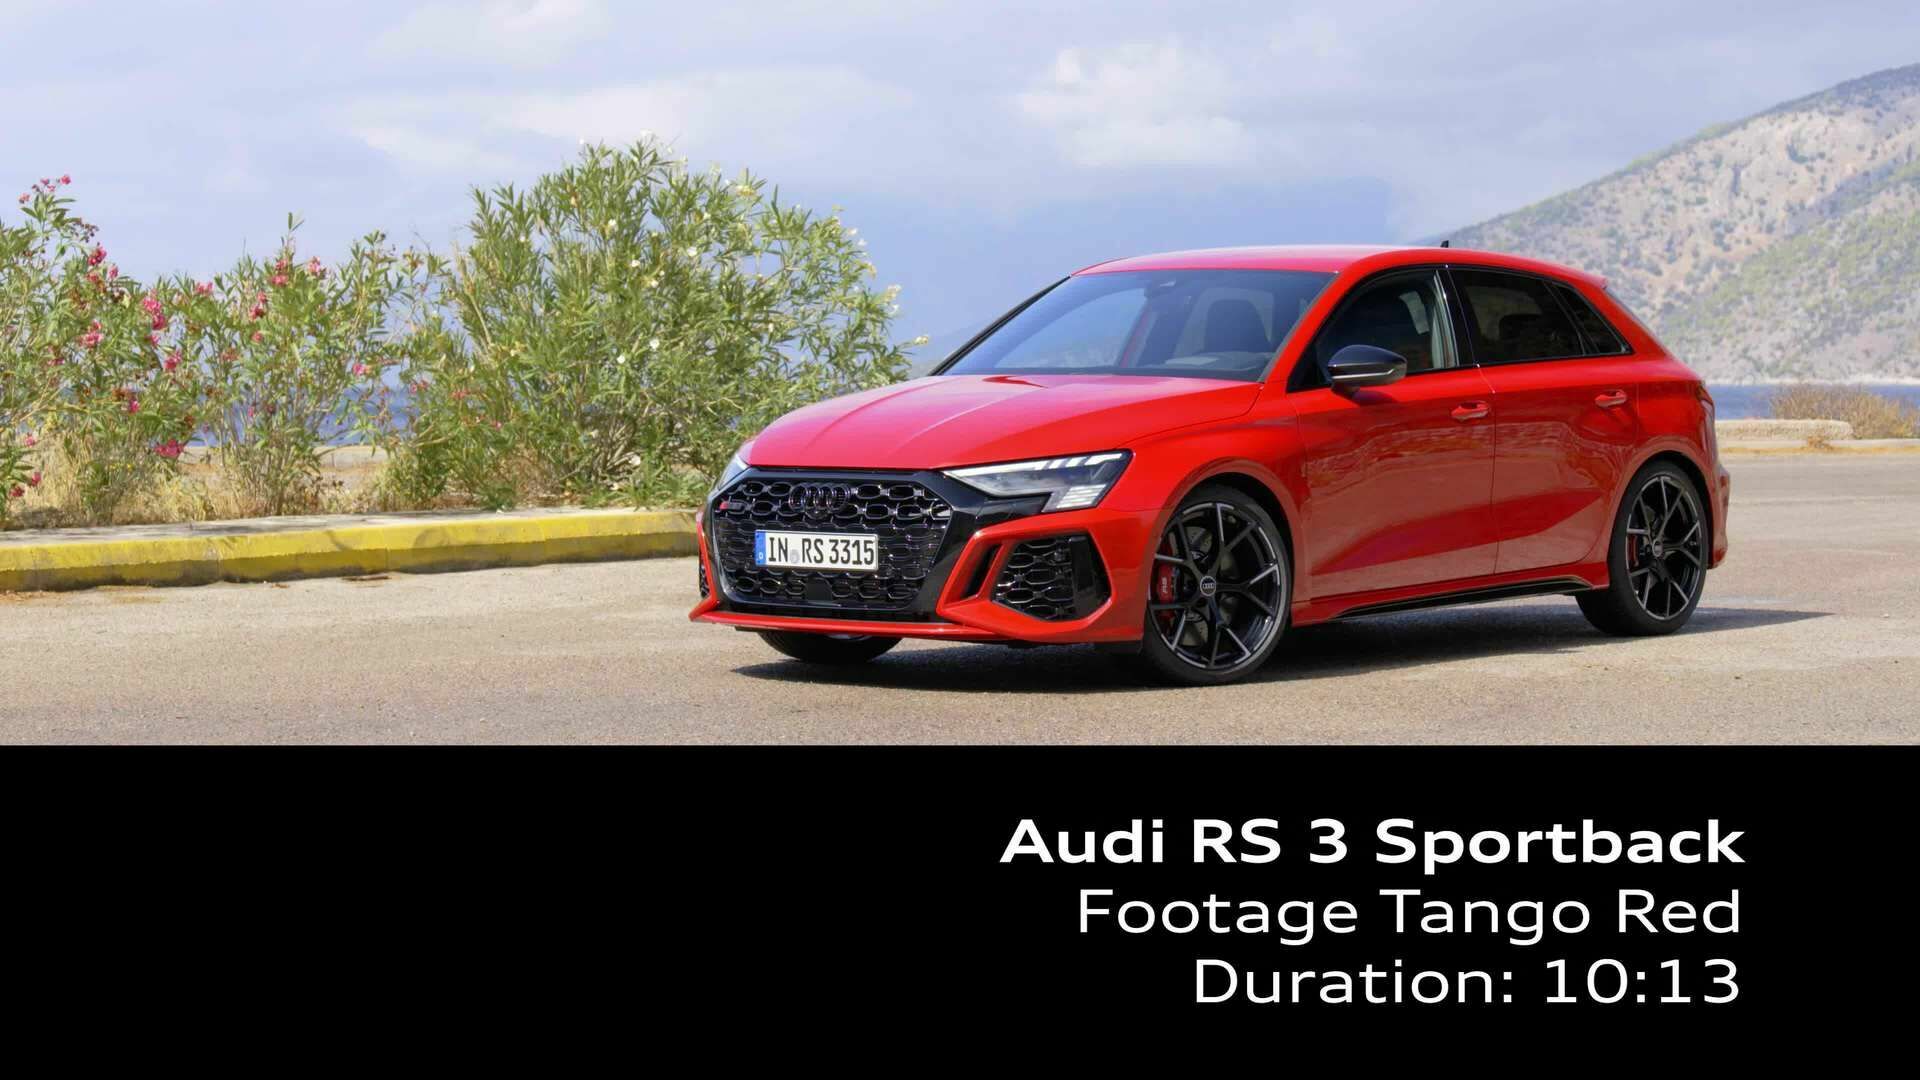 Footage: Audi RS 3 Sportback Tango red